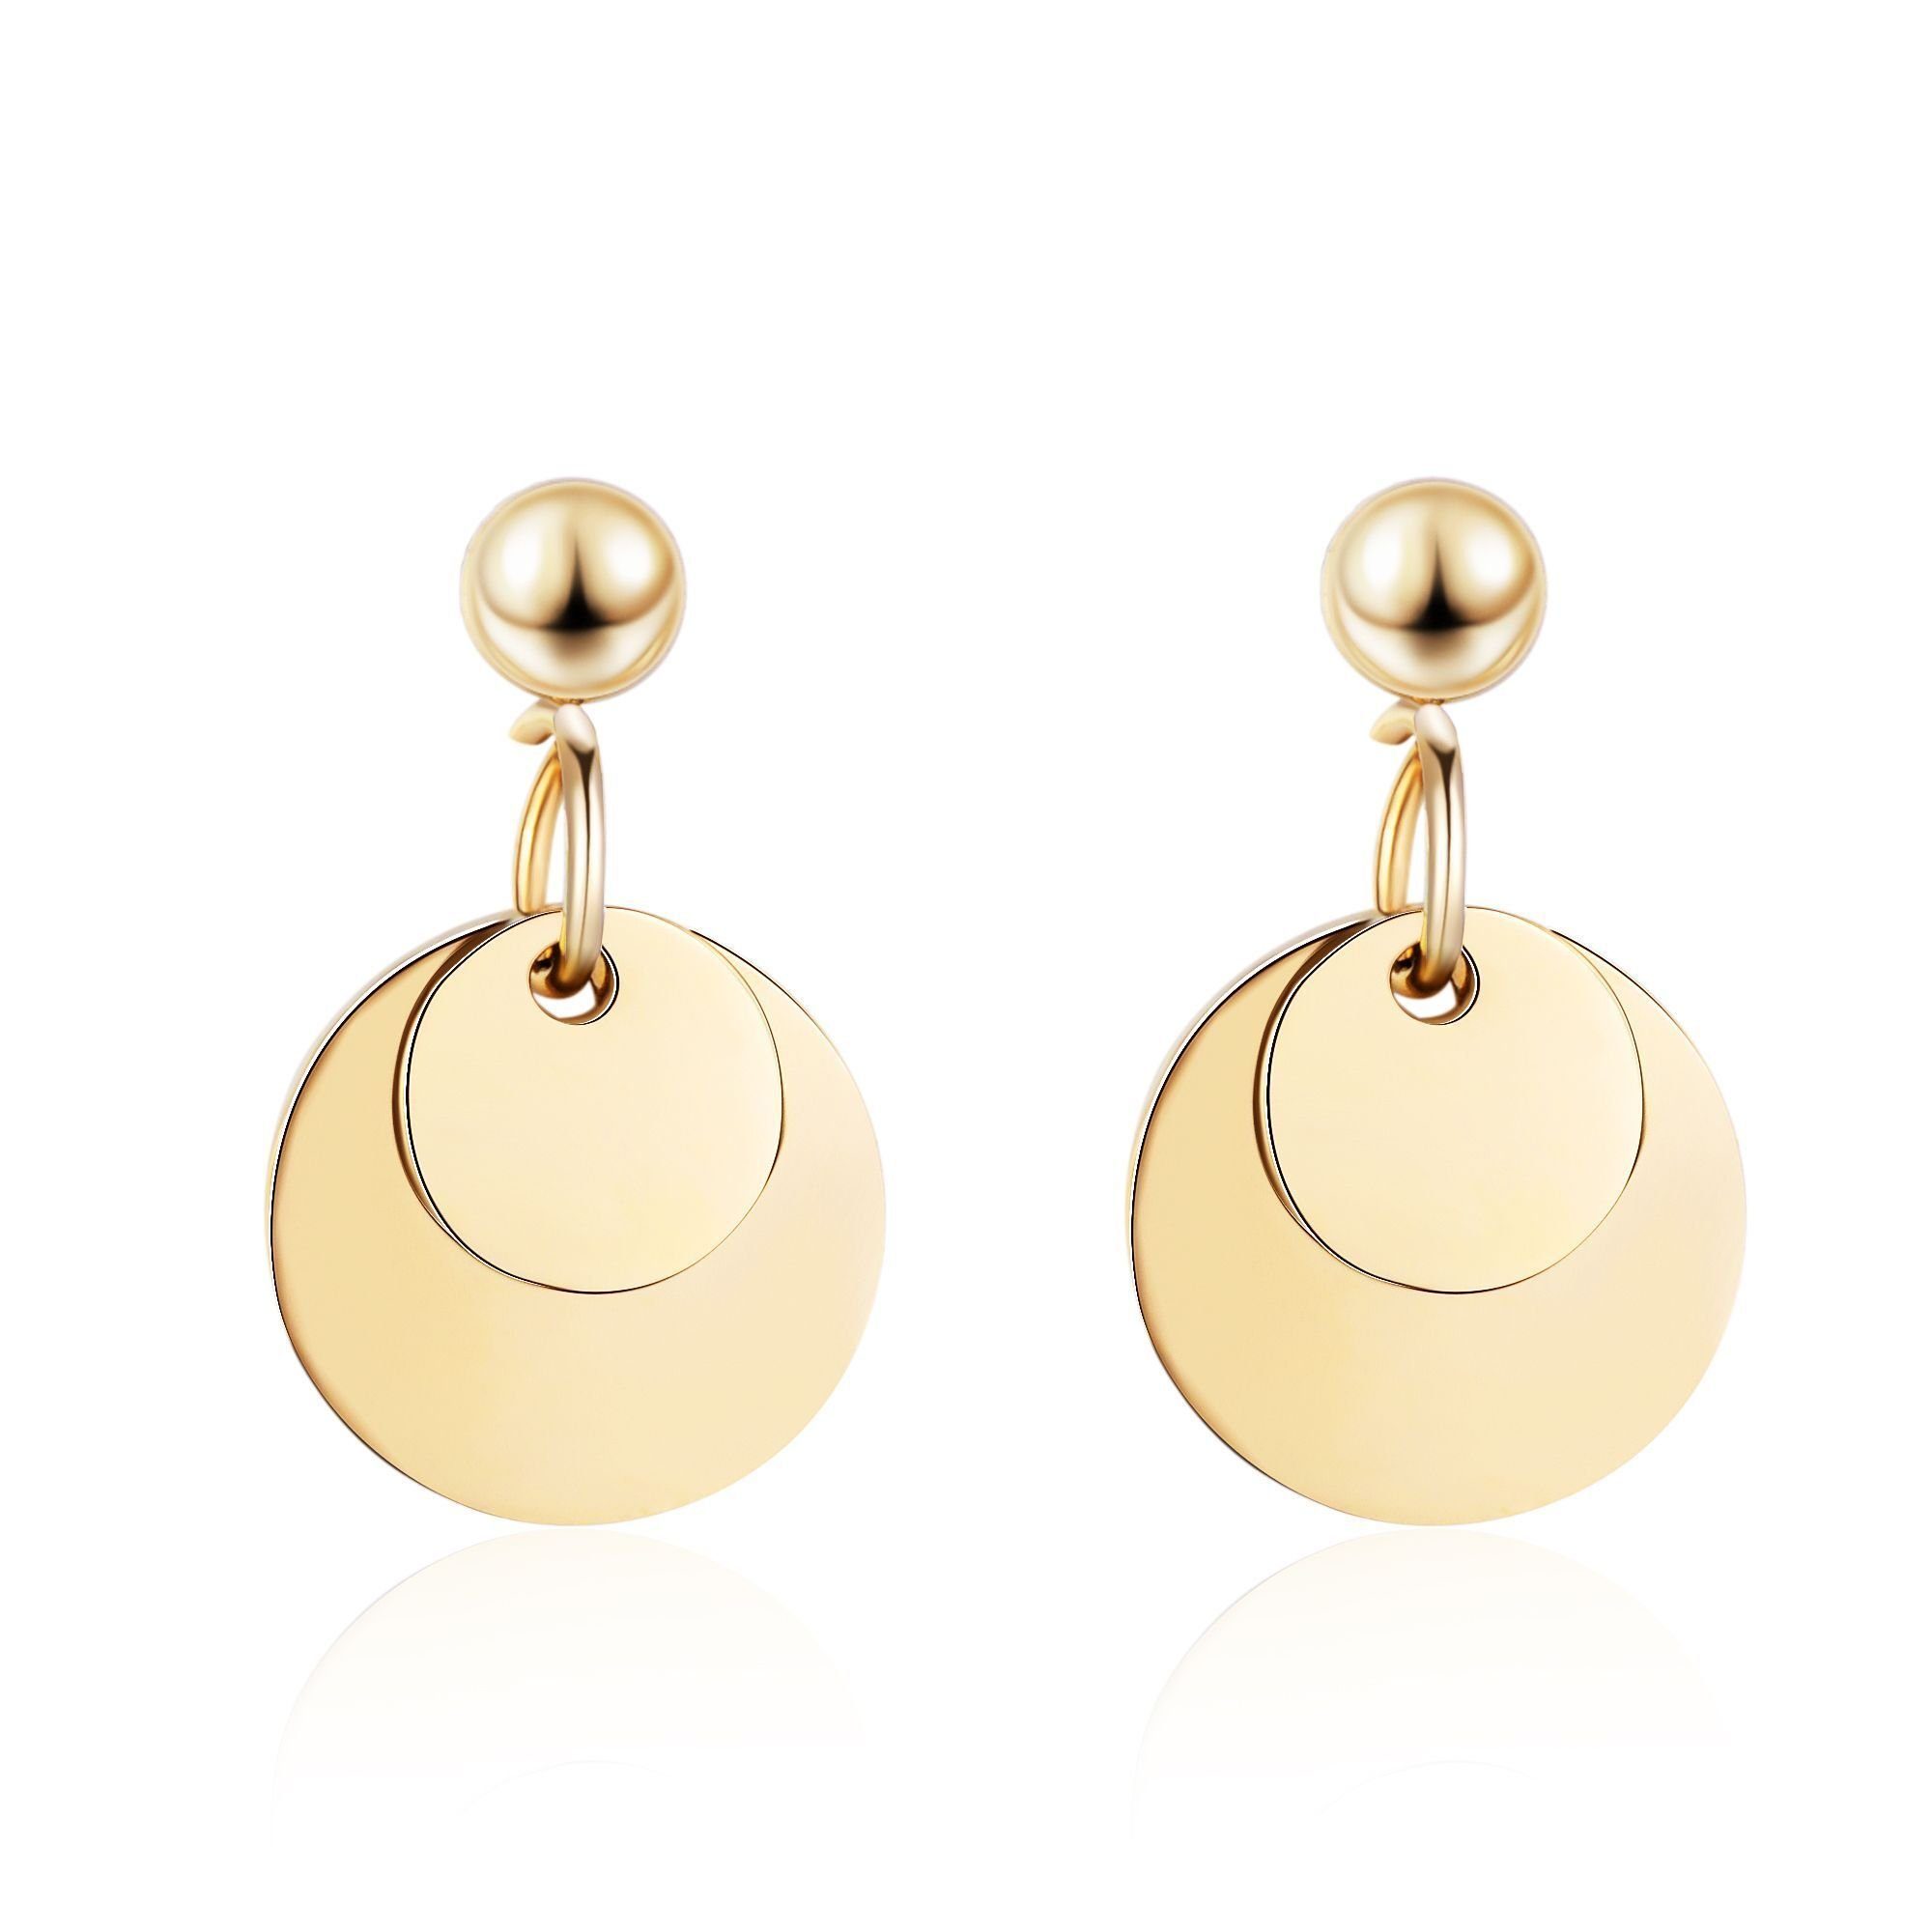 AILORIA Paar Ohrhänger AURORE ohrringe, Ohrringe aus glänzendem Edelstahl goldfarben | Ohrhänger